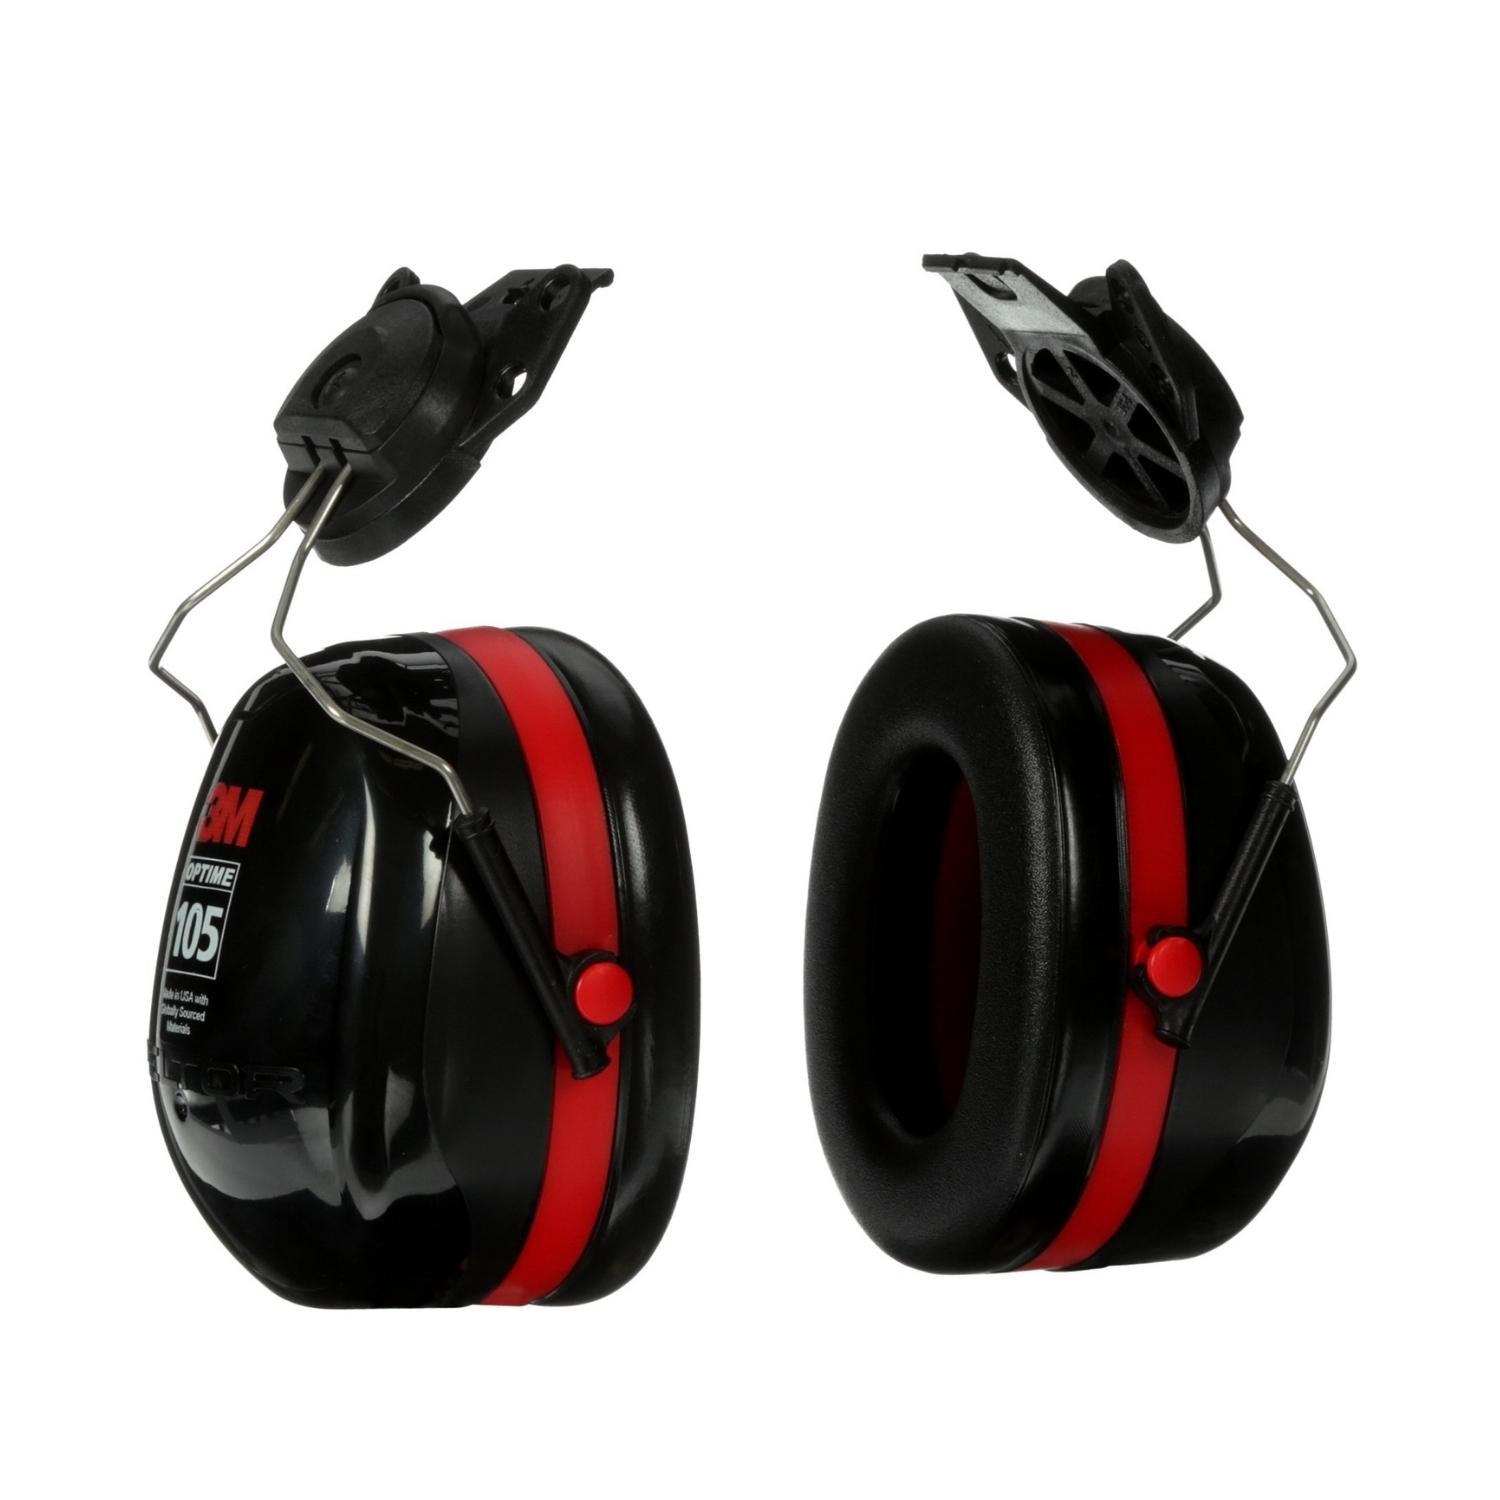 Earmuffs 3M™ Peltor™ OPTIME™I, Ear muffs